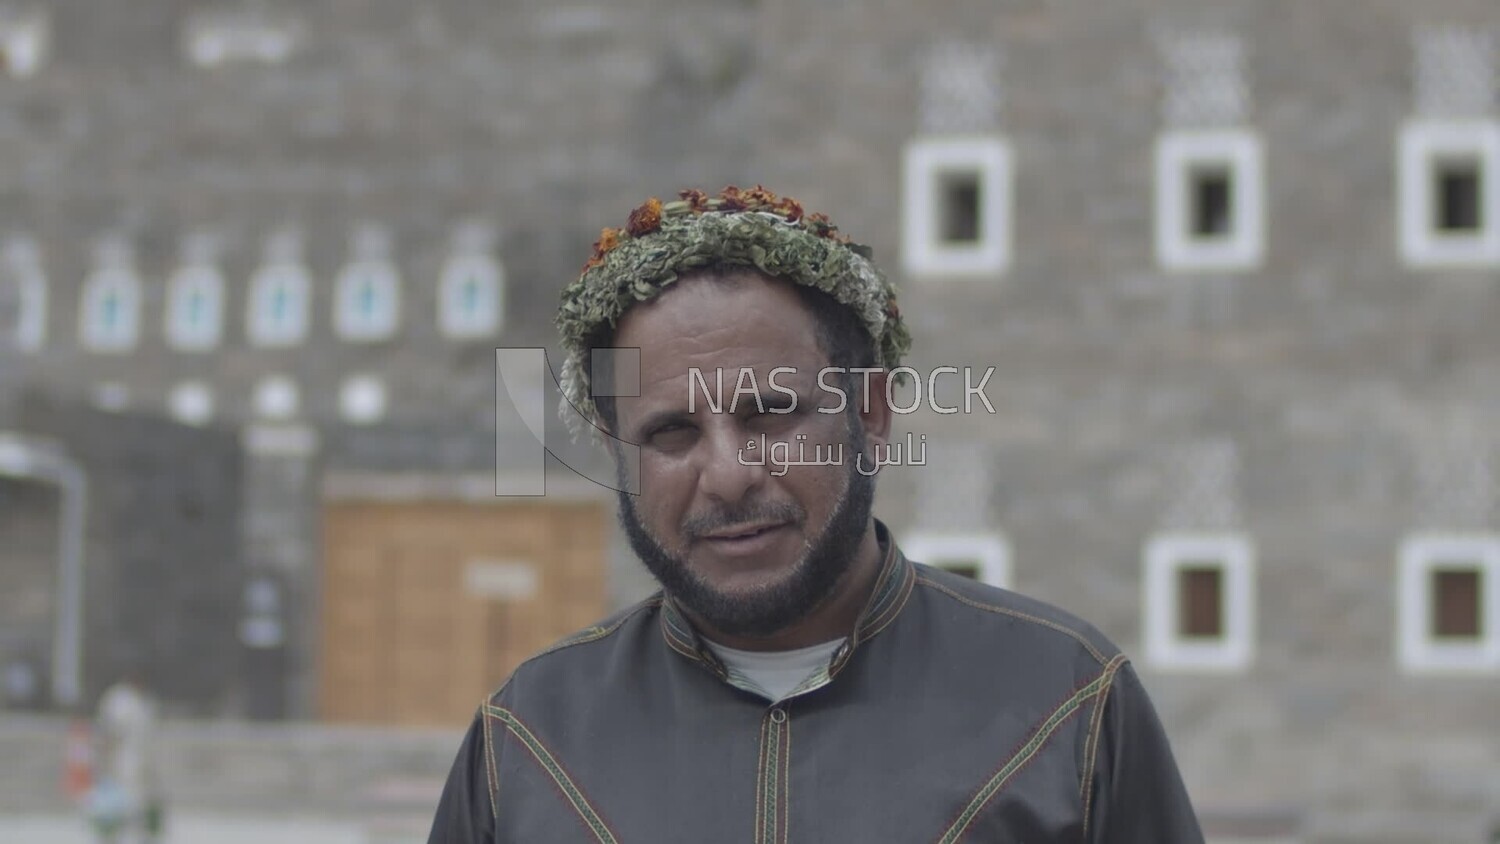 Man from Rijal Almaa village, Asir, Saudi Arabia